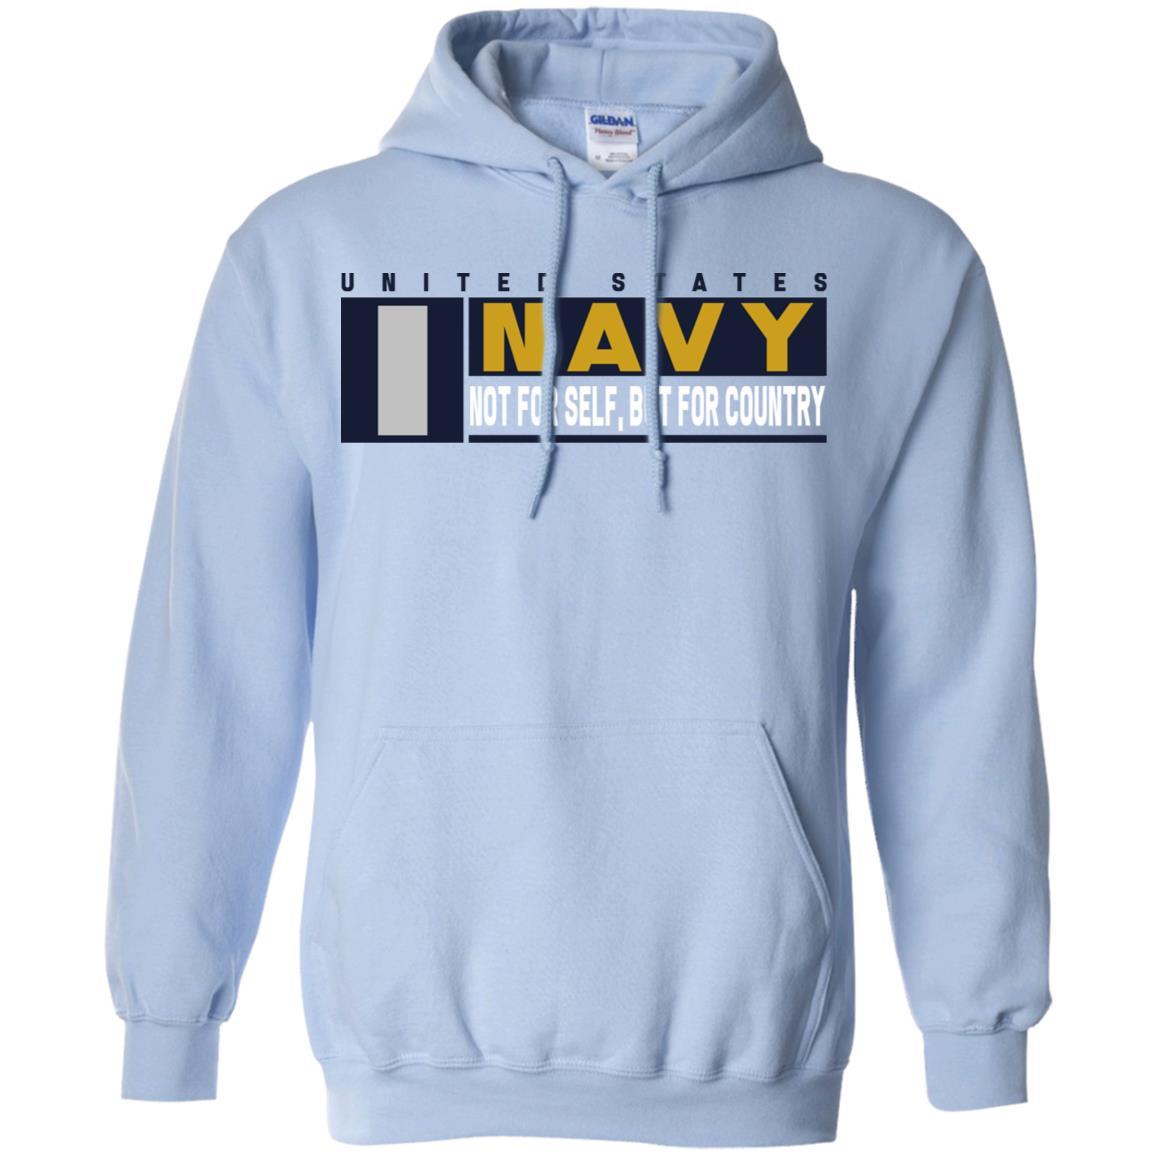 US Navy O-2 Lieutenant Junior Grade O2 LTJG Not For Self, But For Country Long Sleeve - Pullover Hoodie-TShirt-Navy-Veterans Nation